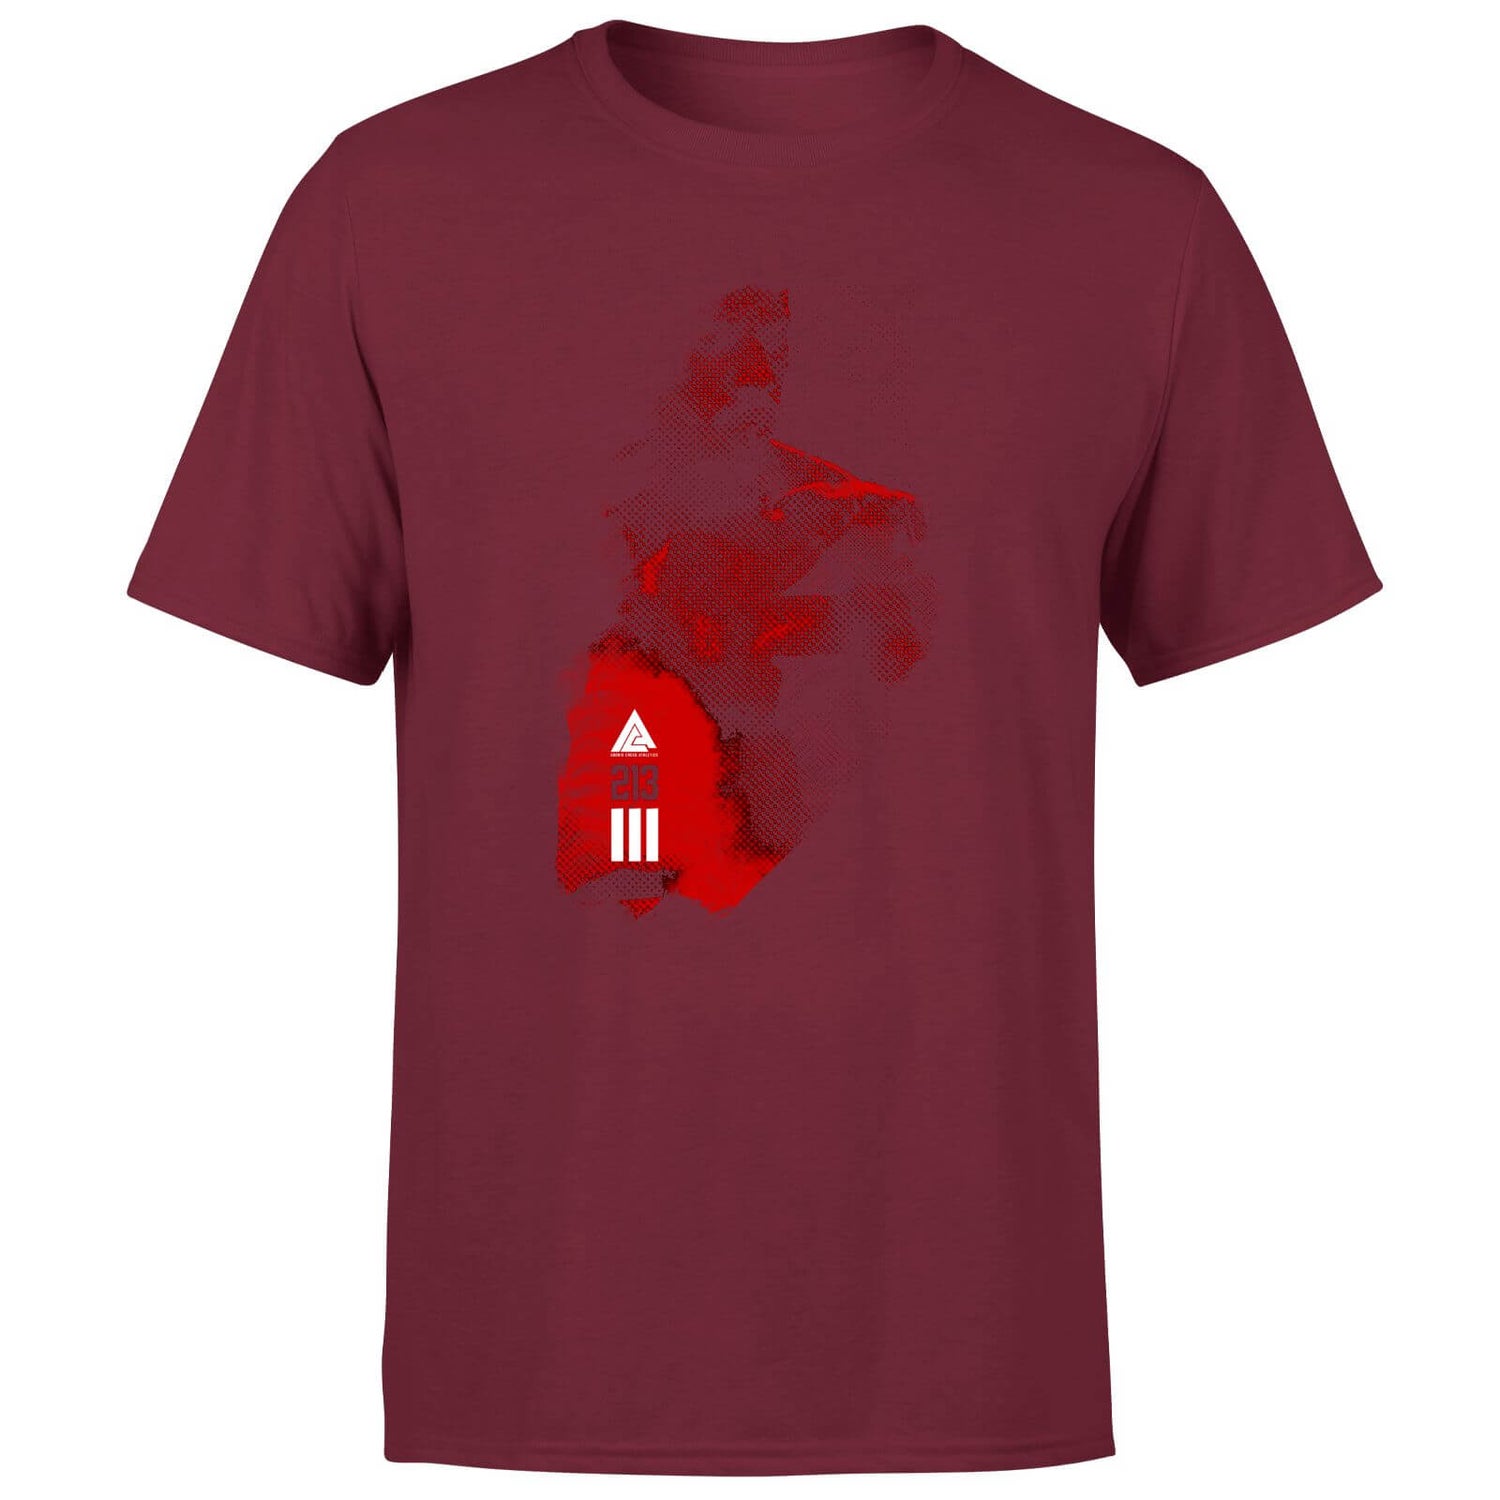 Creed 213 Men's T-Shirt - Burgundy